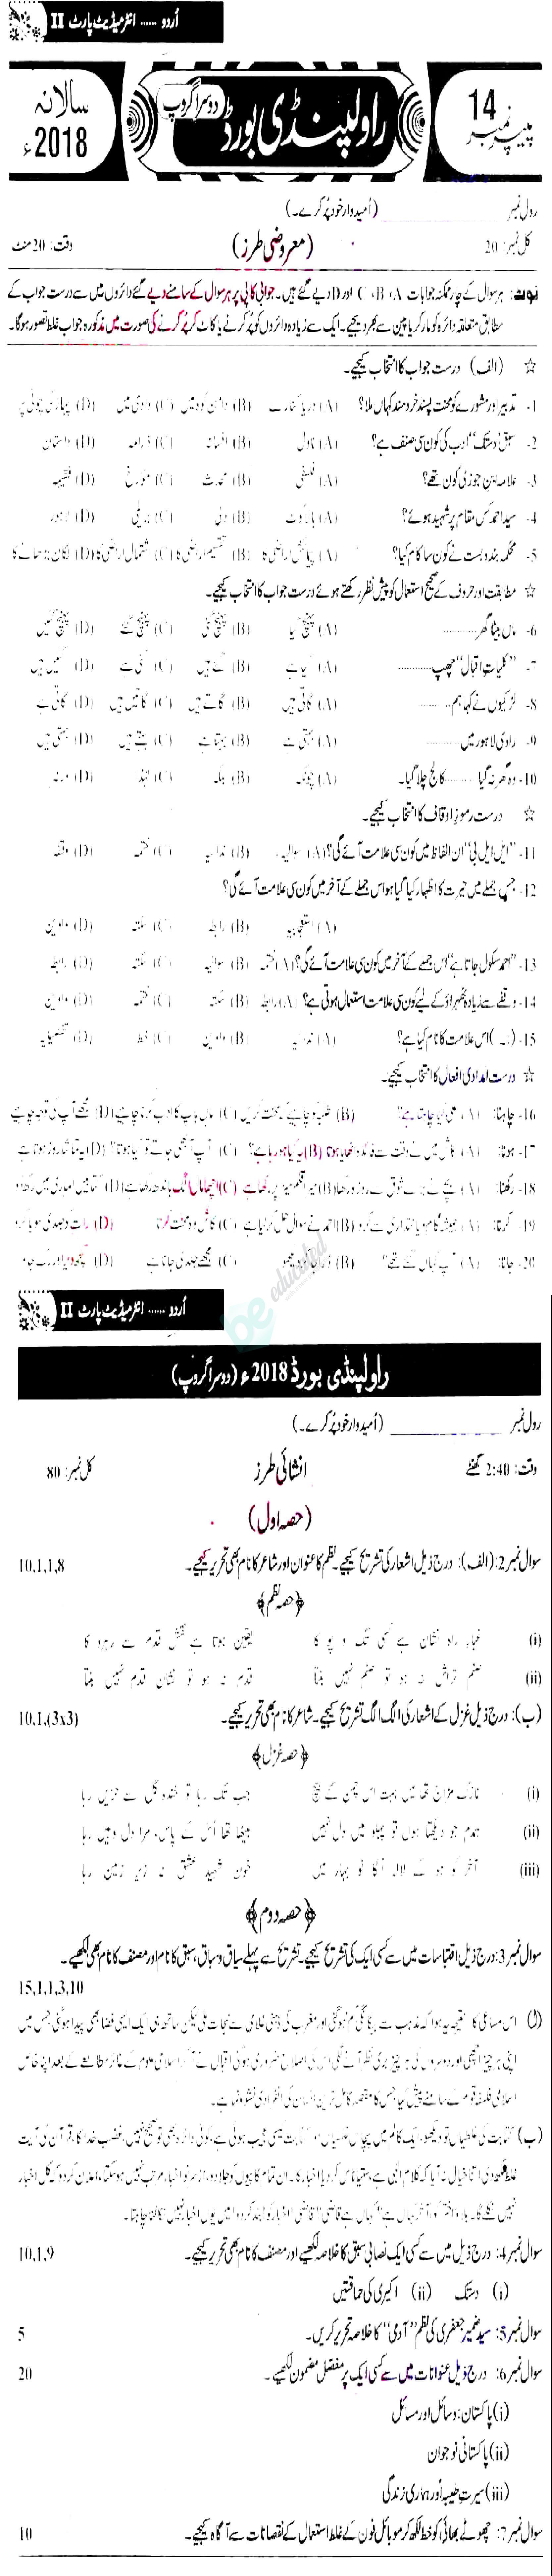 Urdu 12th class Past Paper Group 2 BISE Bahawalpur 2018